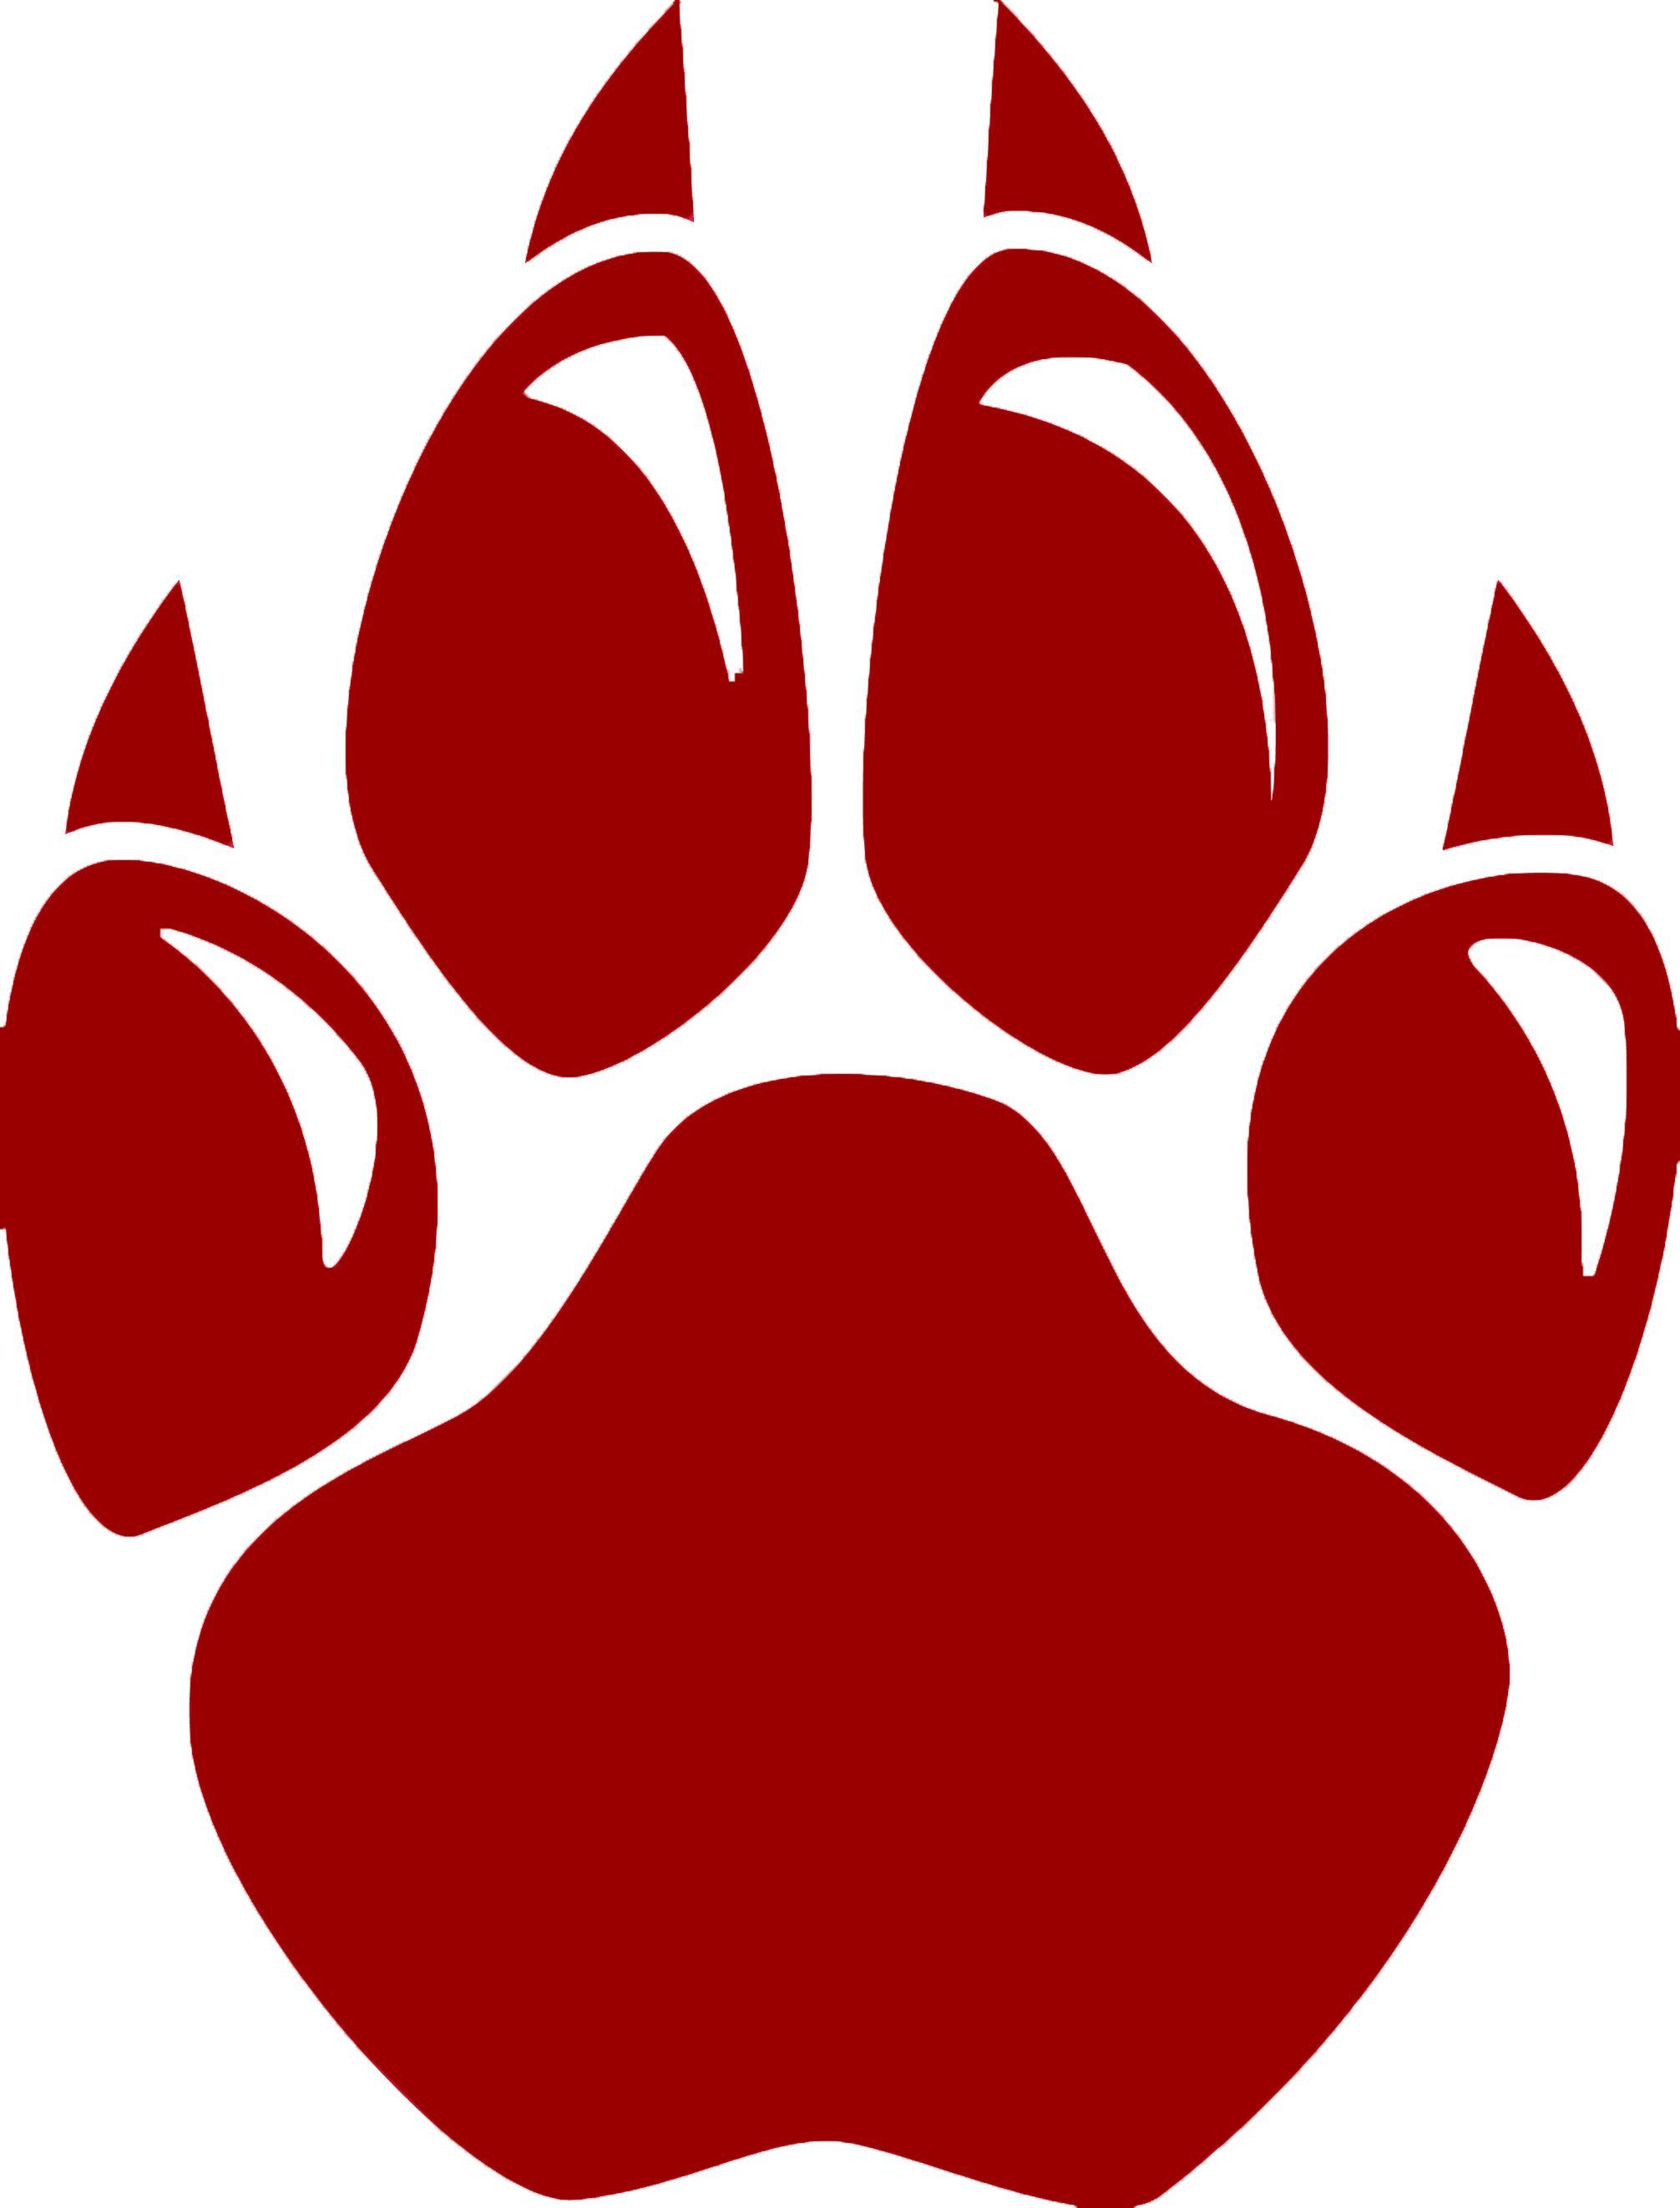 Wildcat Paw Logo - Free Wildcat Paw, Download Free